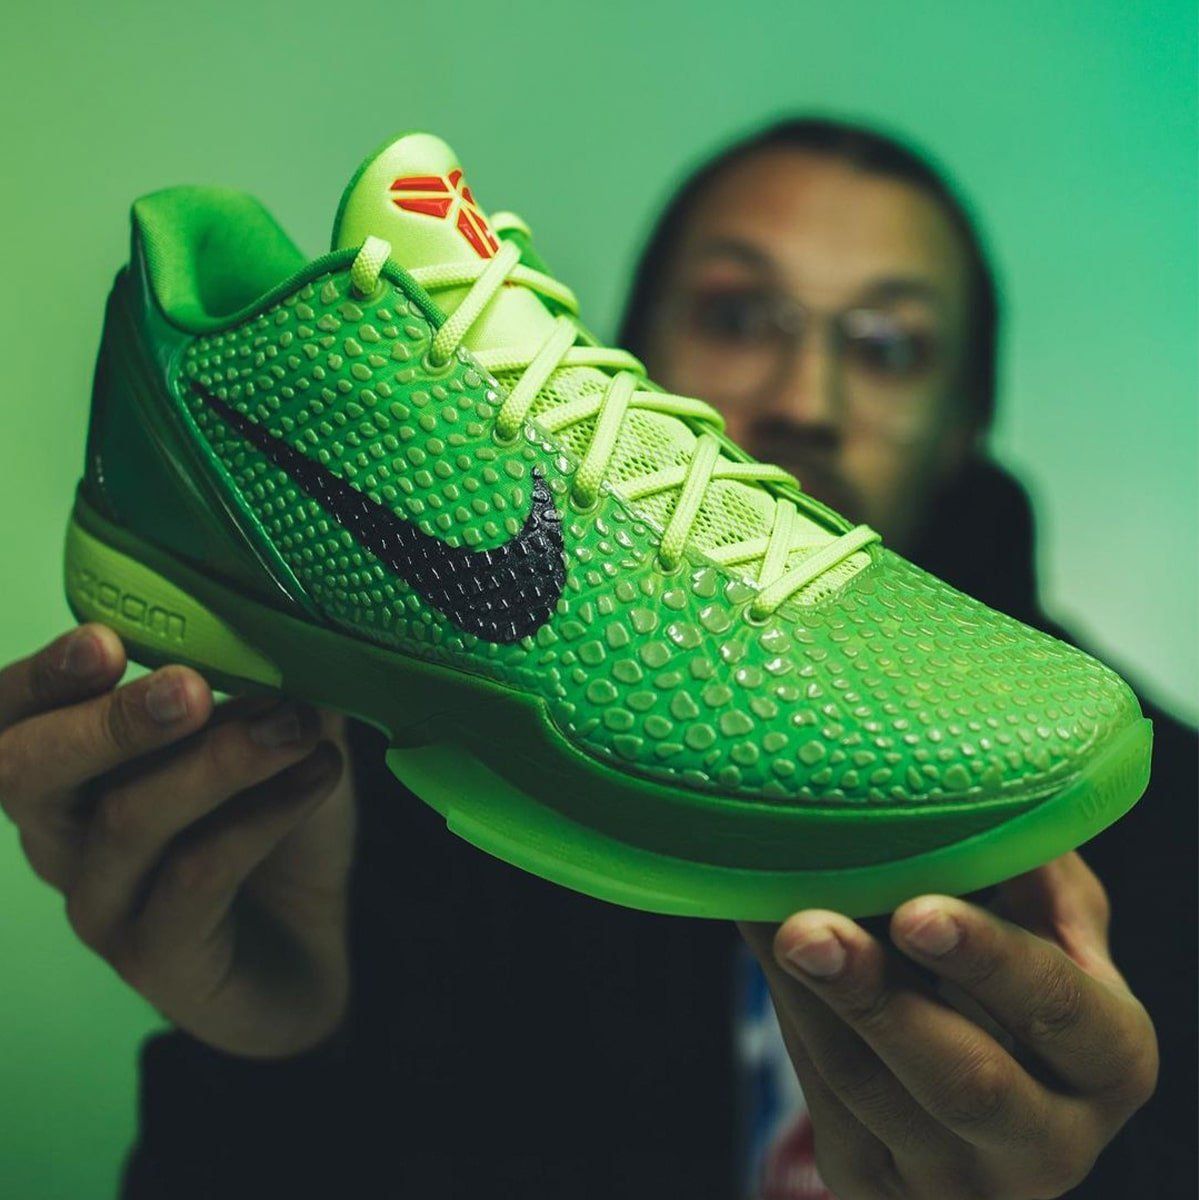 Nike Kobe 6 “Grinch” Confirmed for 